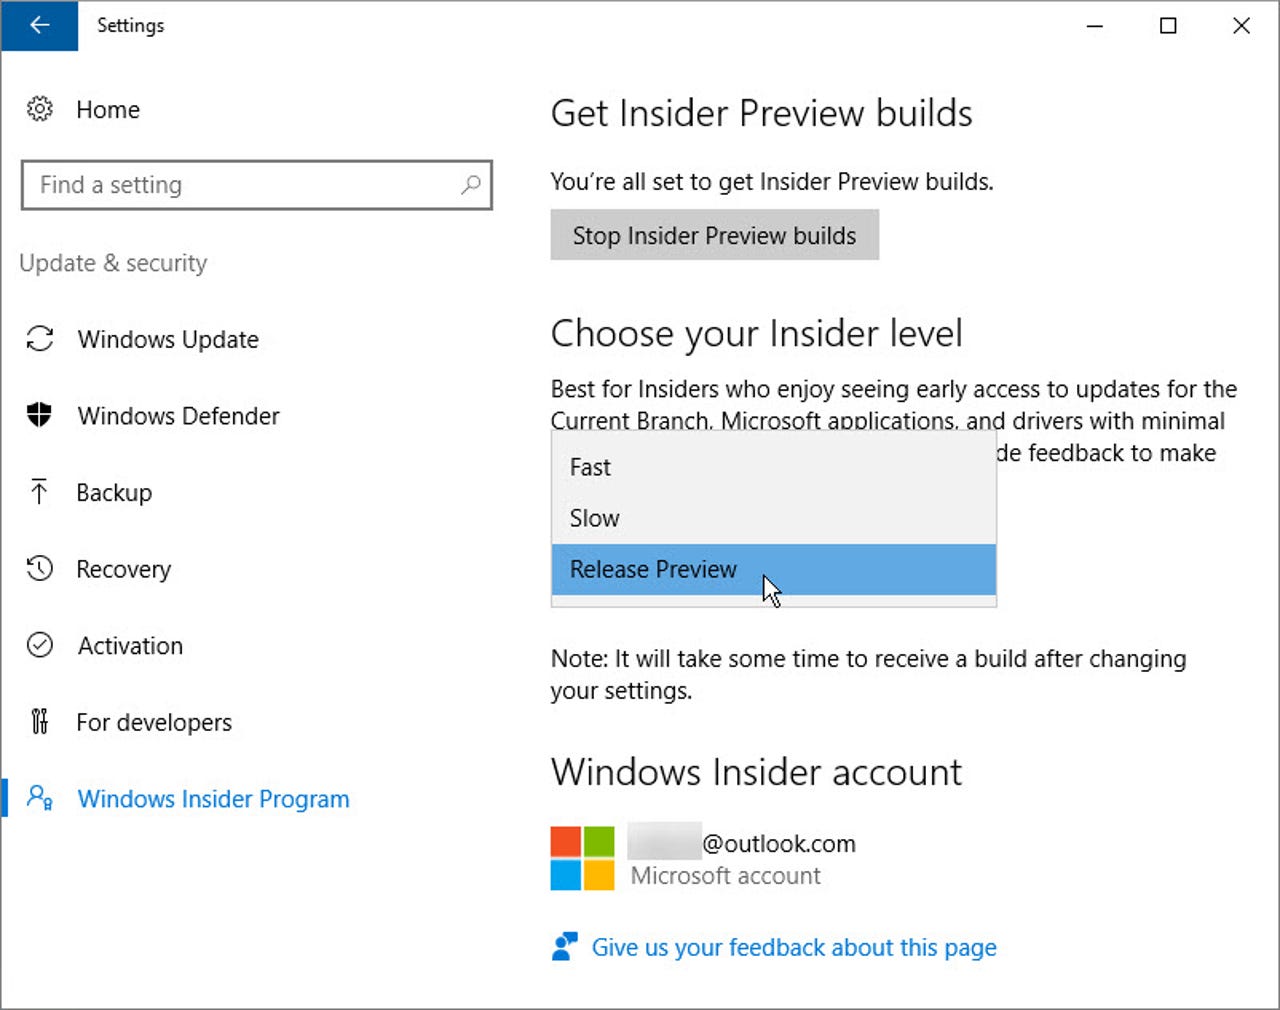 The Windows Insider Program